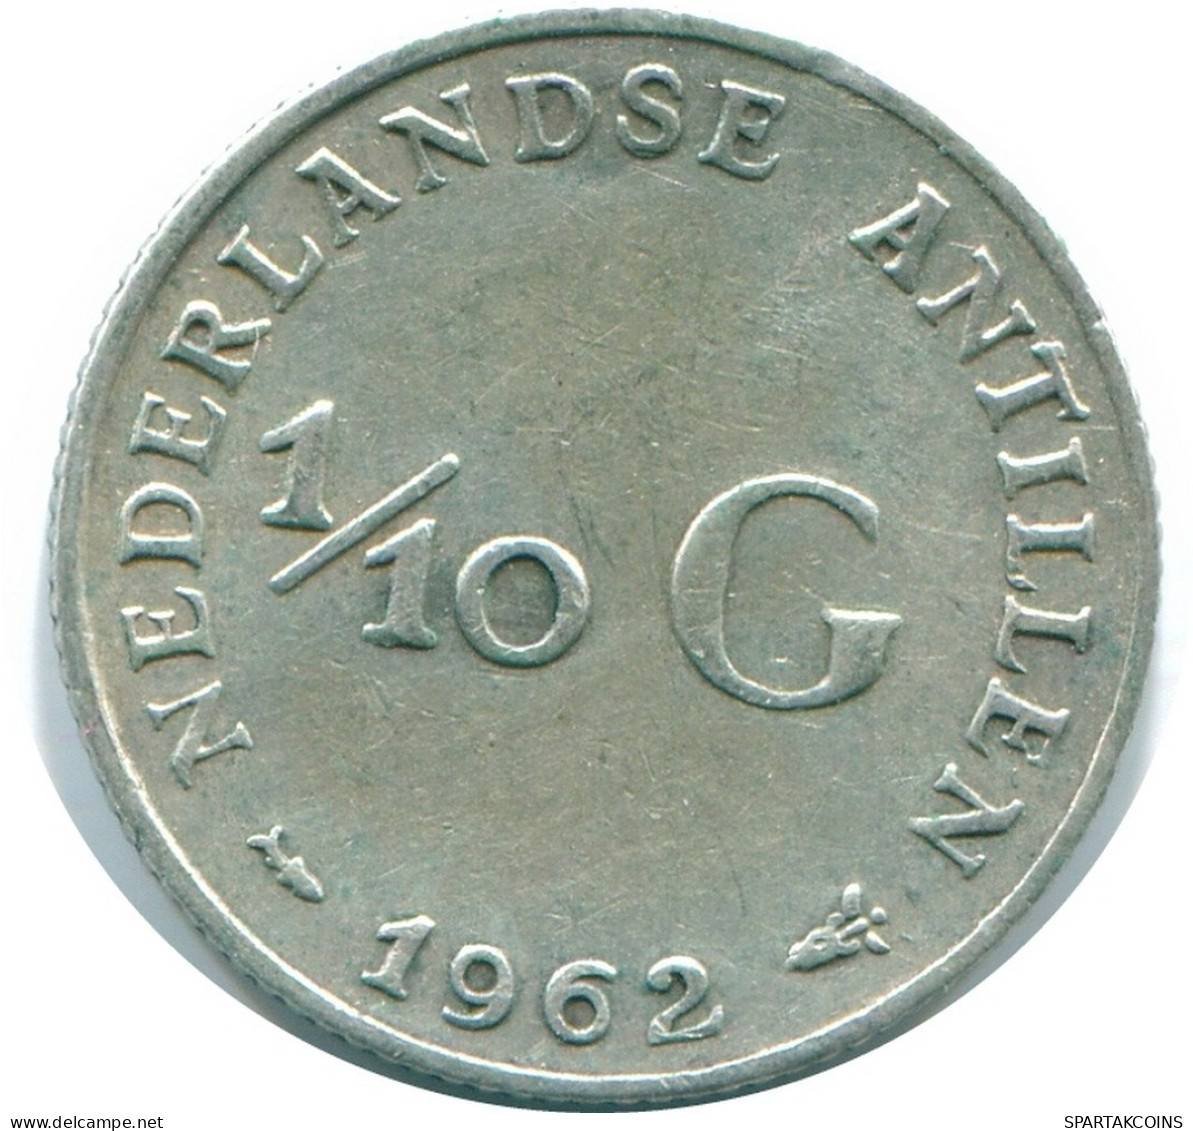 1/10 GULDEN 1962 NETHERLANDS ANTILLES SILVER Colonial Coin #NL12389.3.U.A - Netherlands Antilles